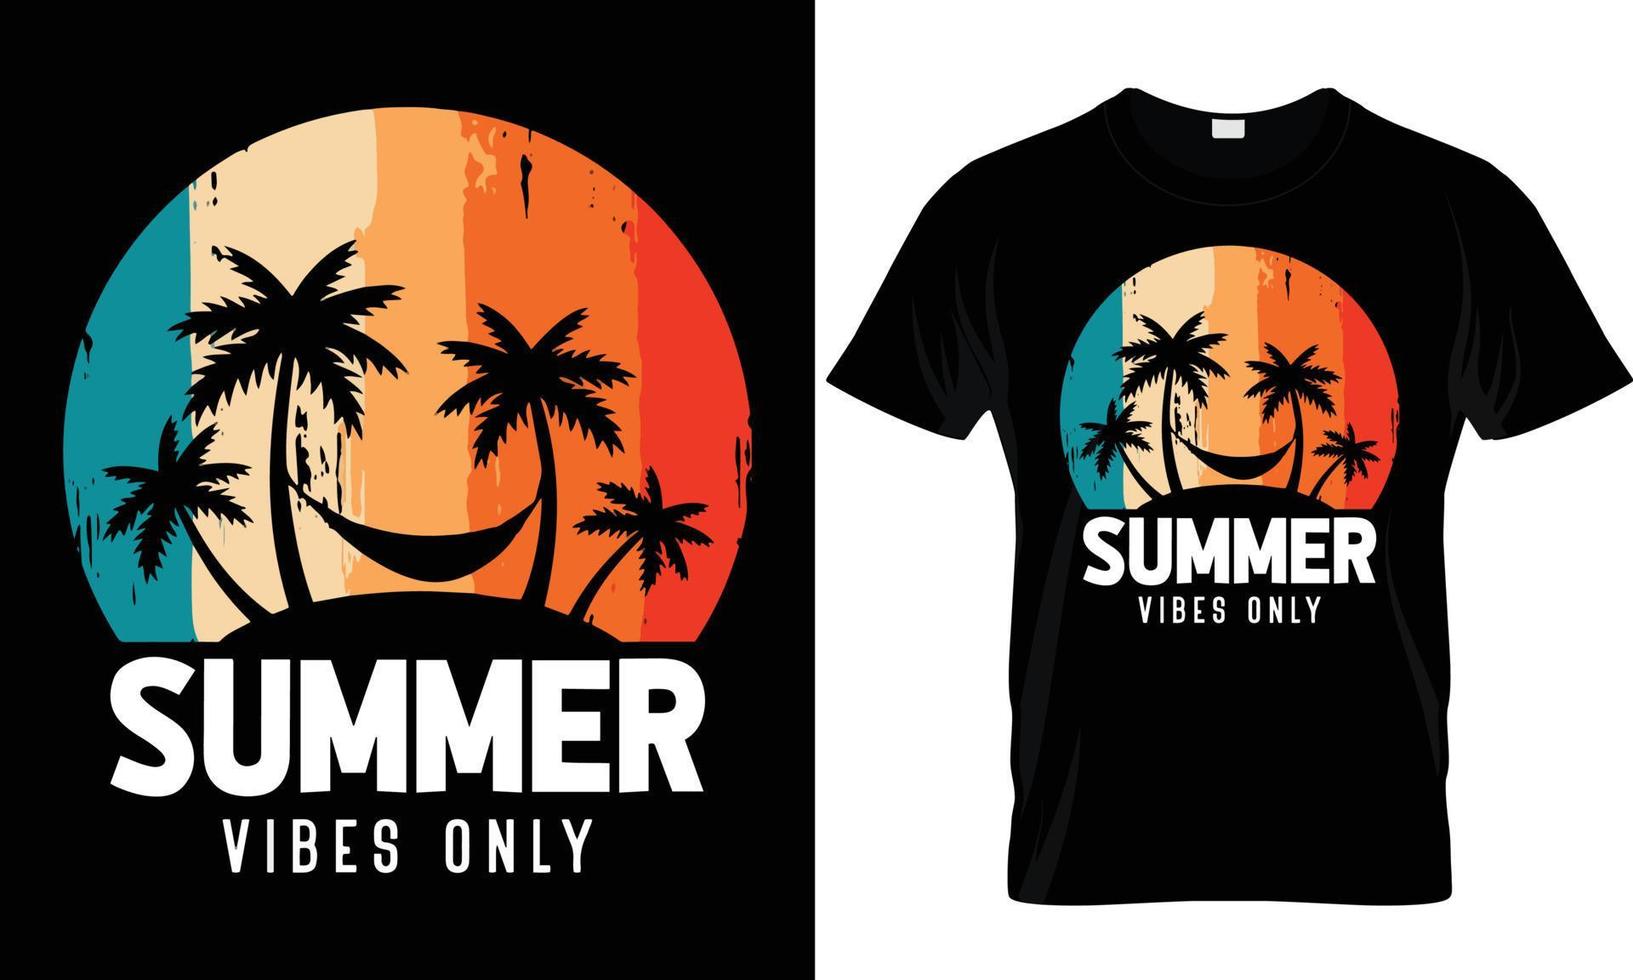 zomer t - overhemd ontwerp vector